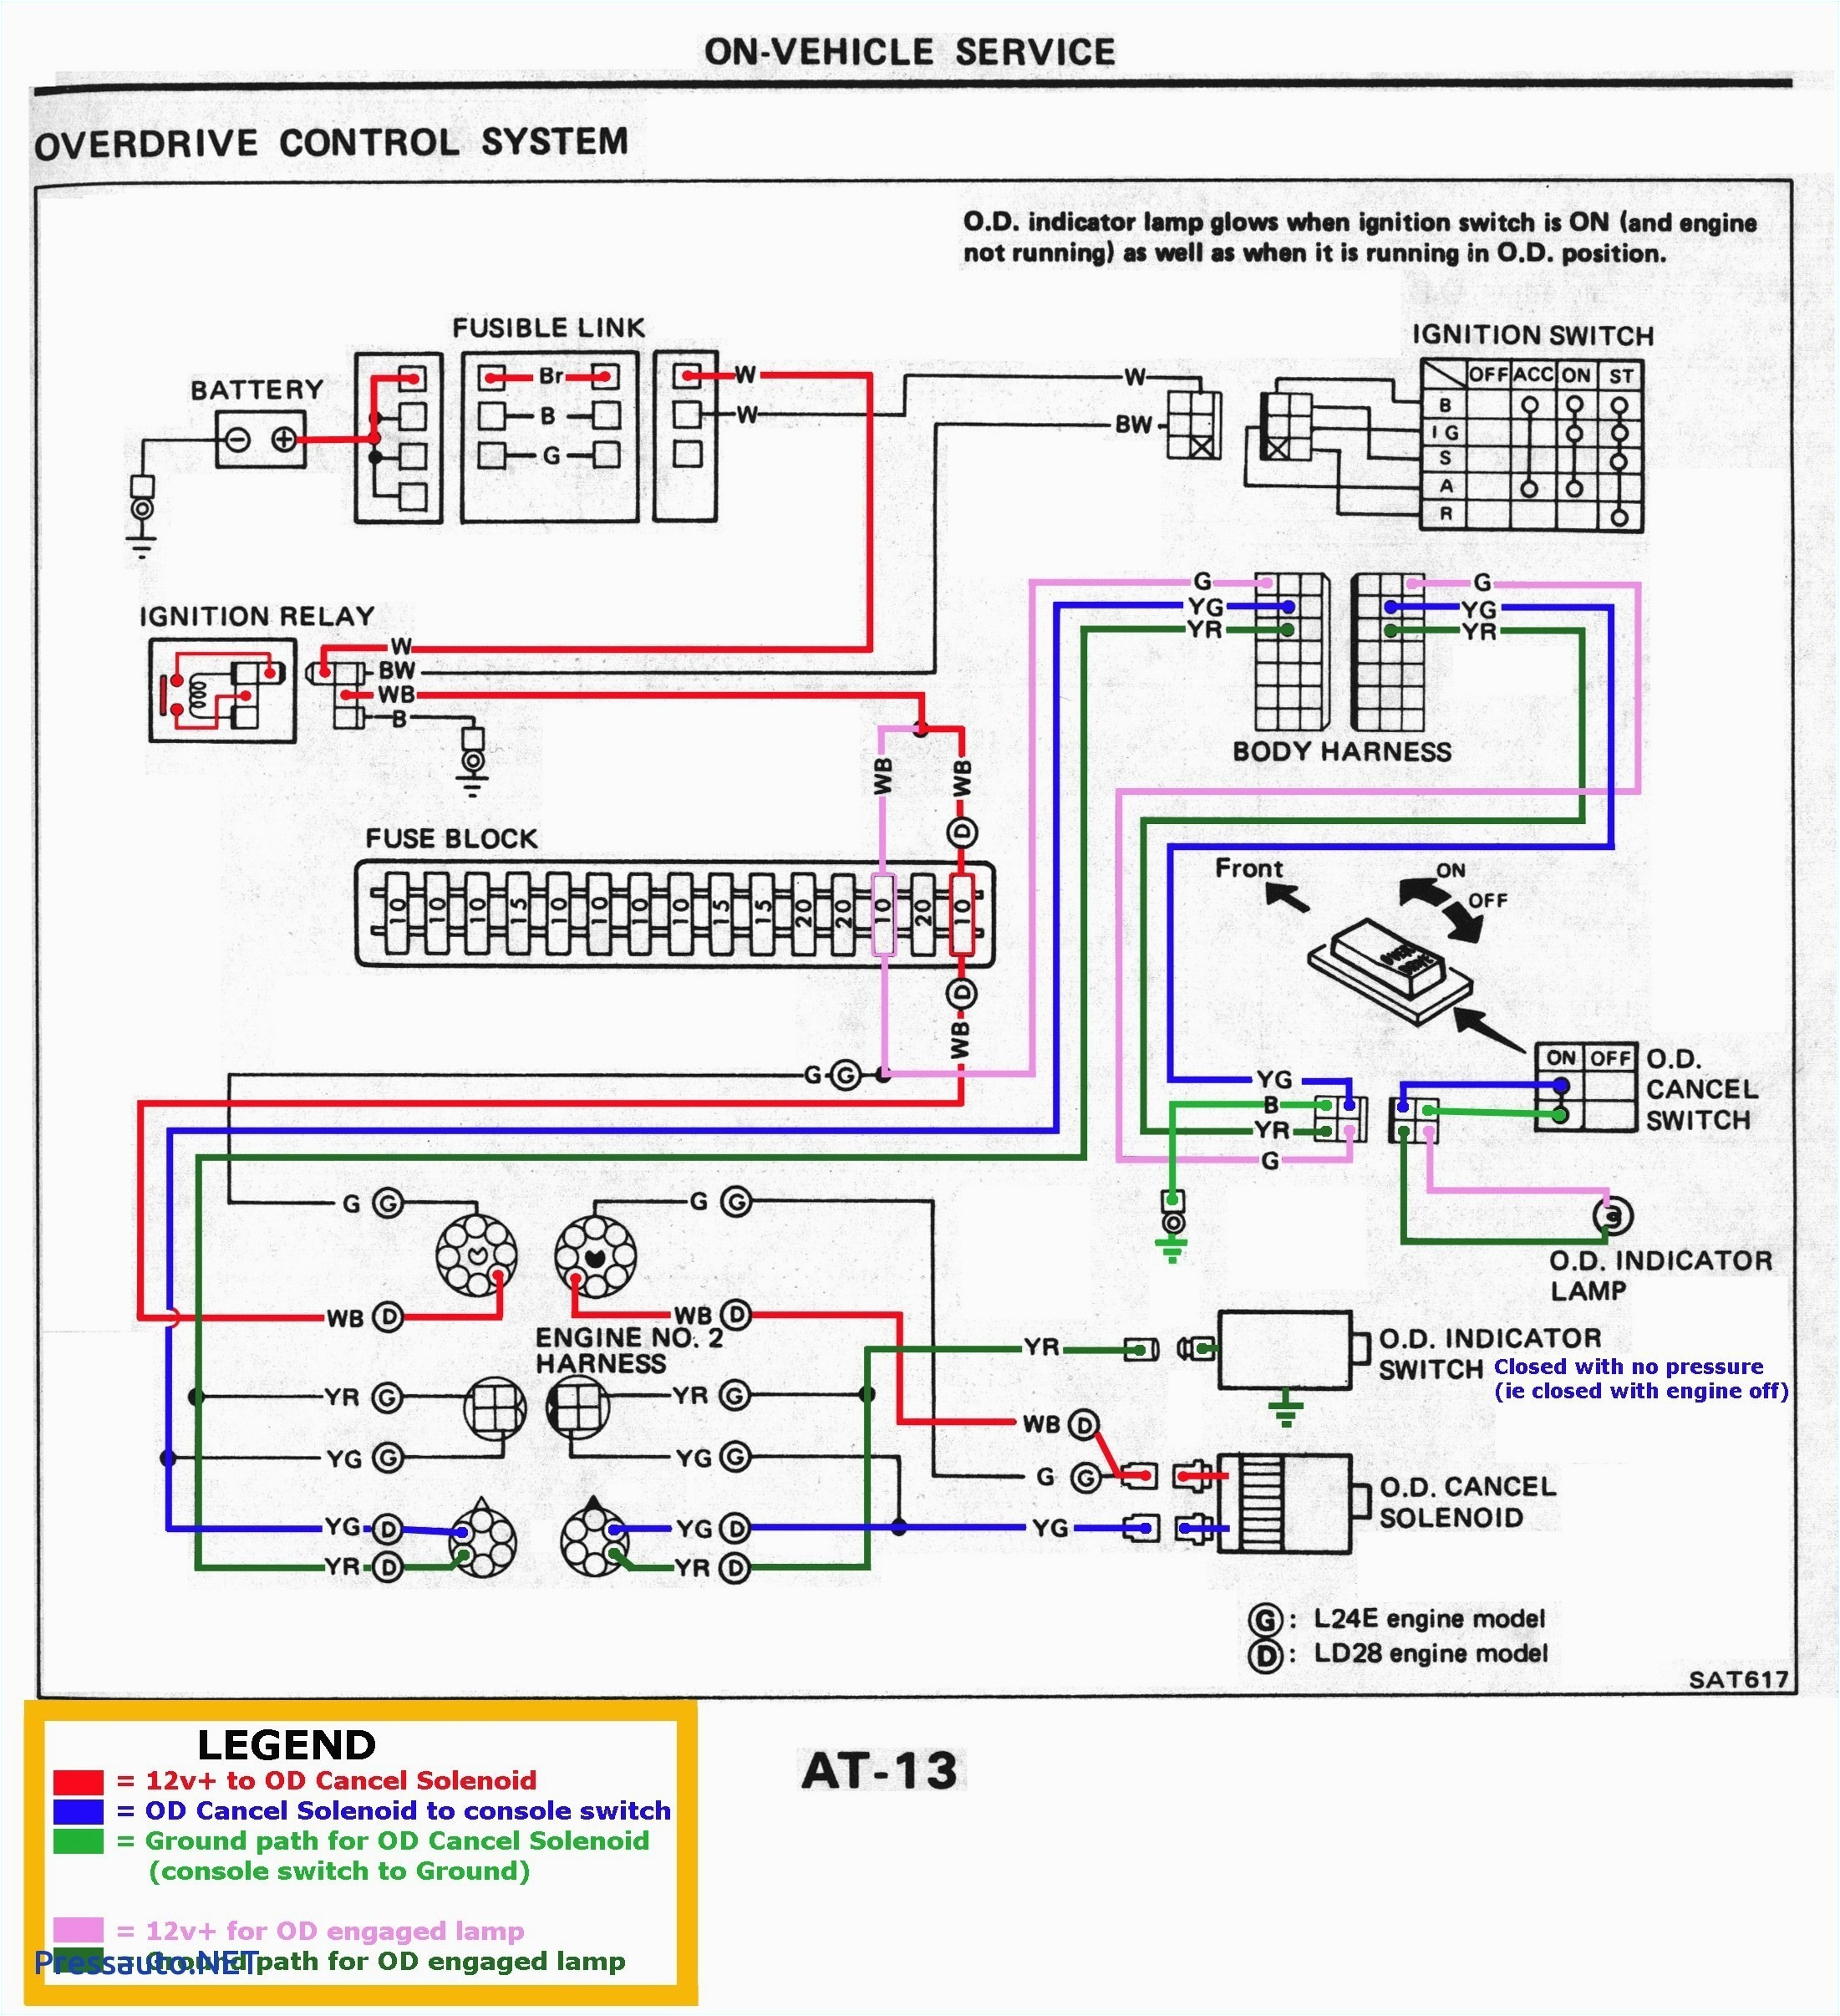 95 honda civic wiring diagram pdf lovely 2000 honda civic headlight wiring diagram new refrence ignition jpg